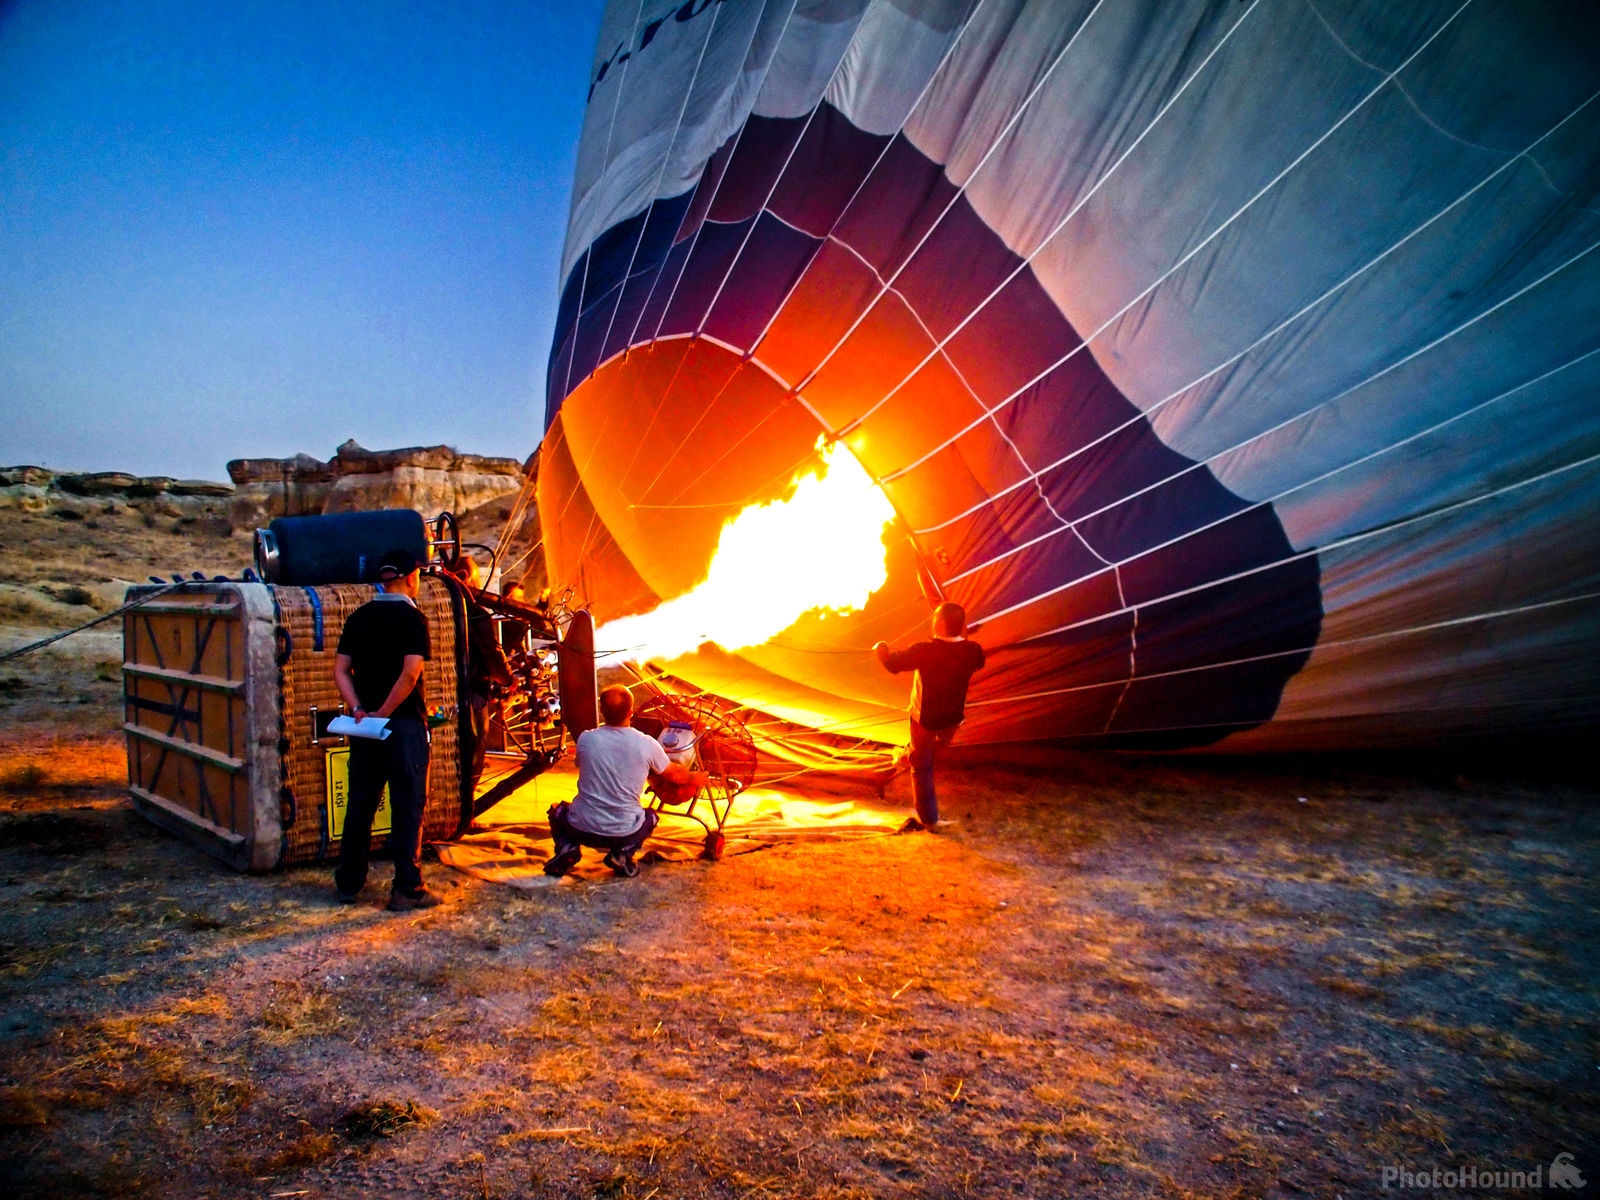 Image of Cappadocia Hot Air Ballooning by Wayne & Lyn Liebelt